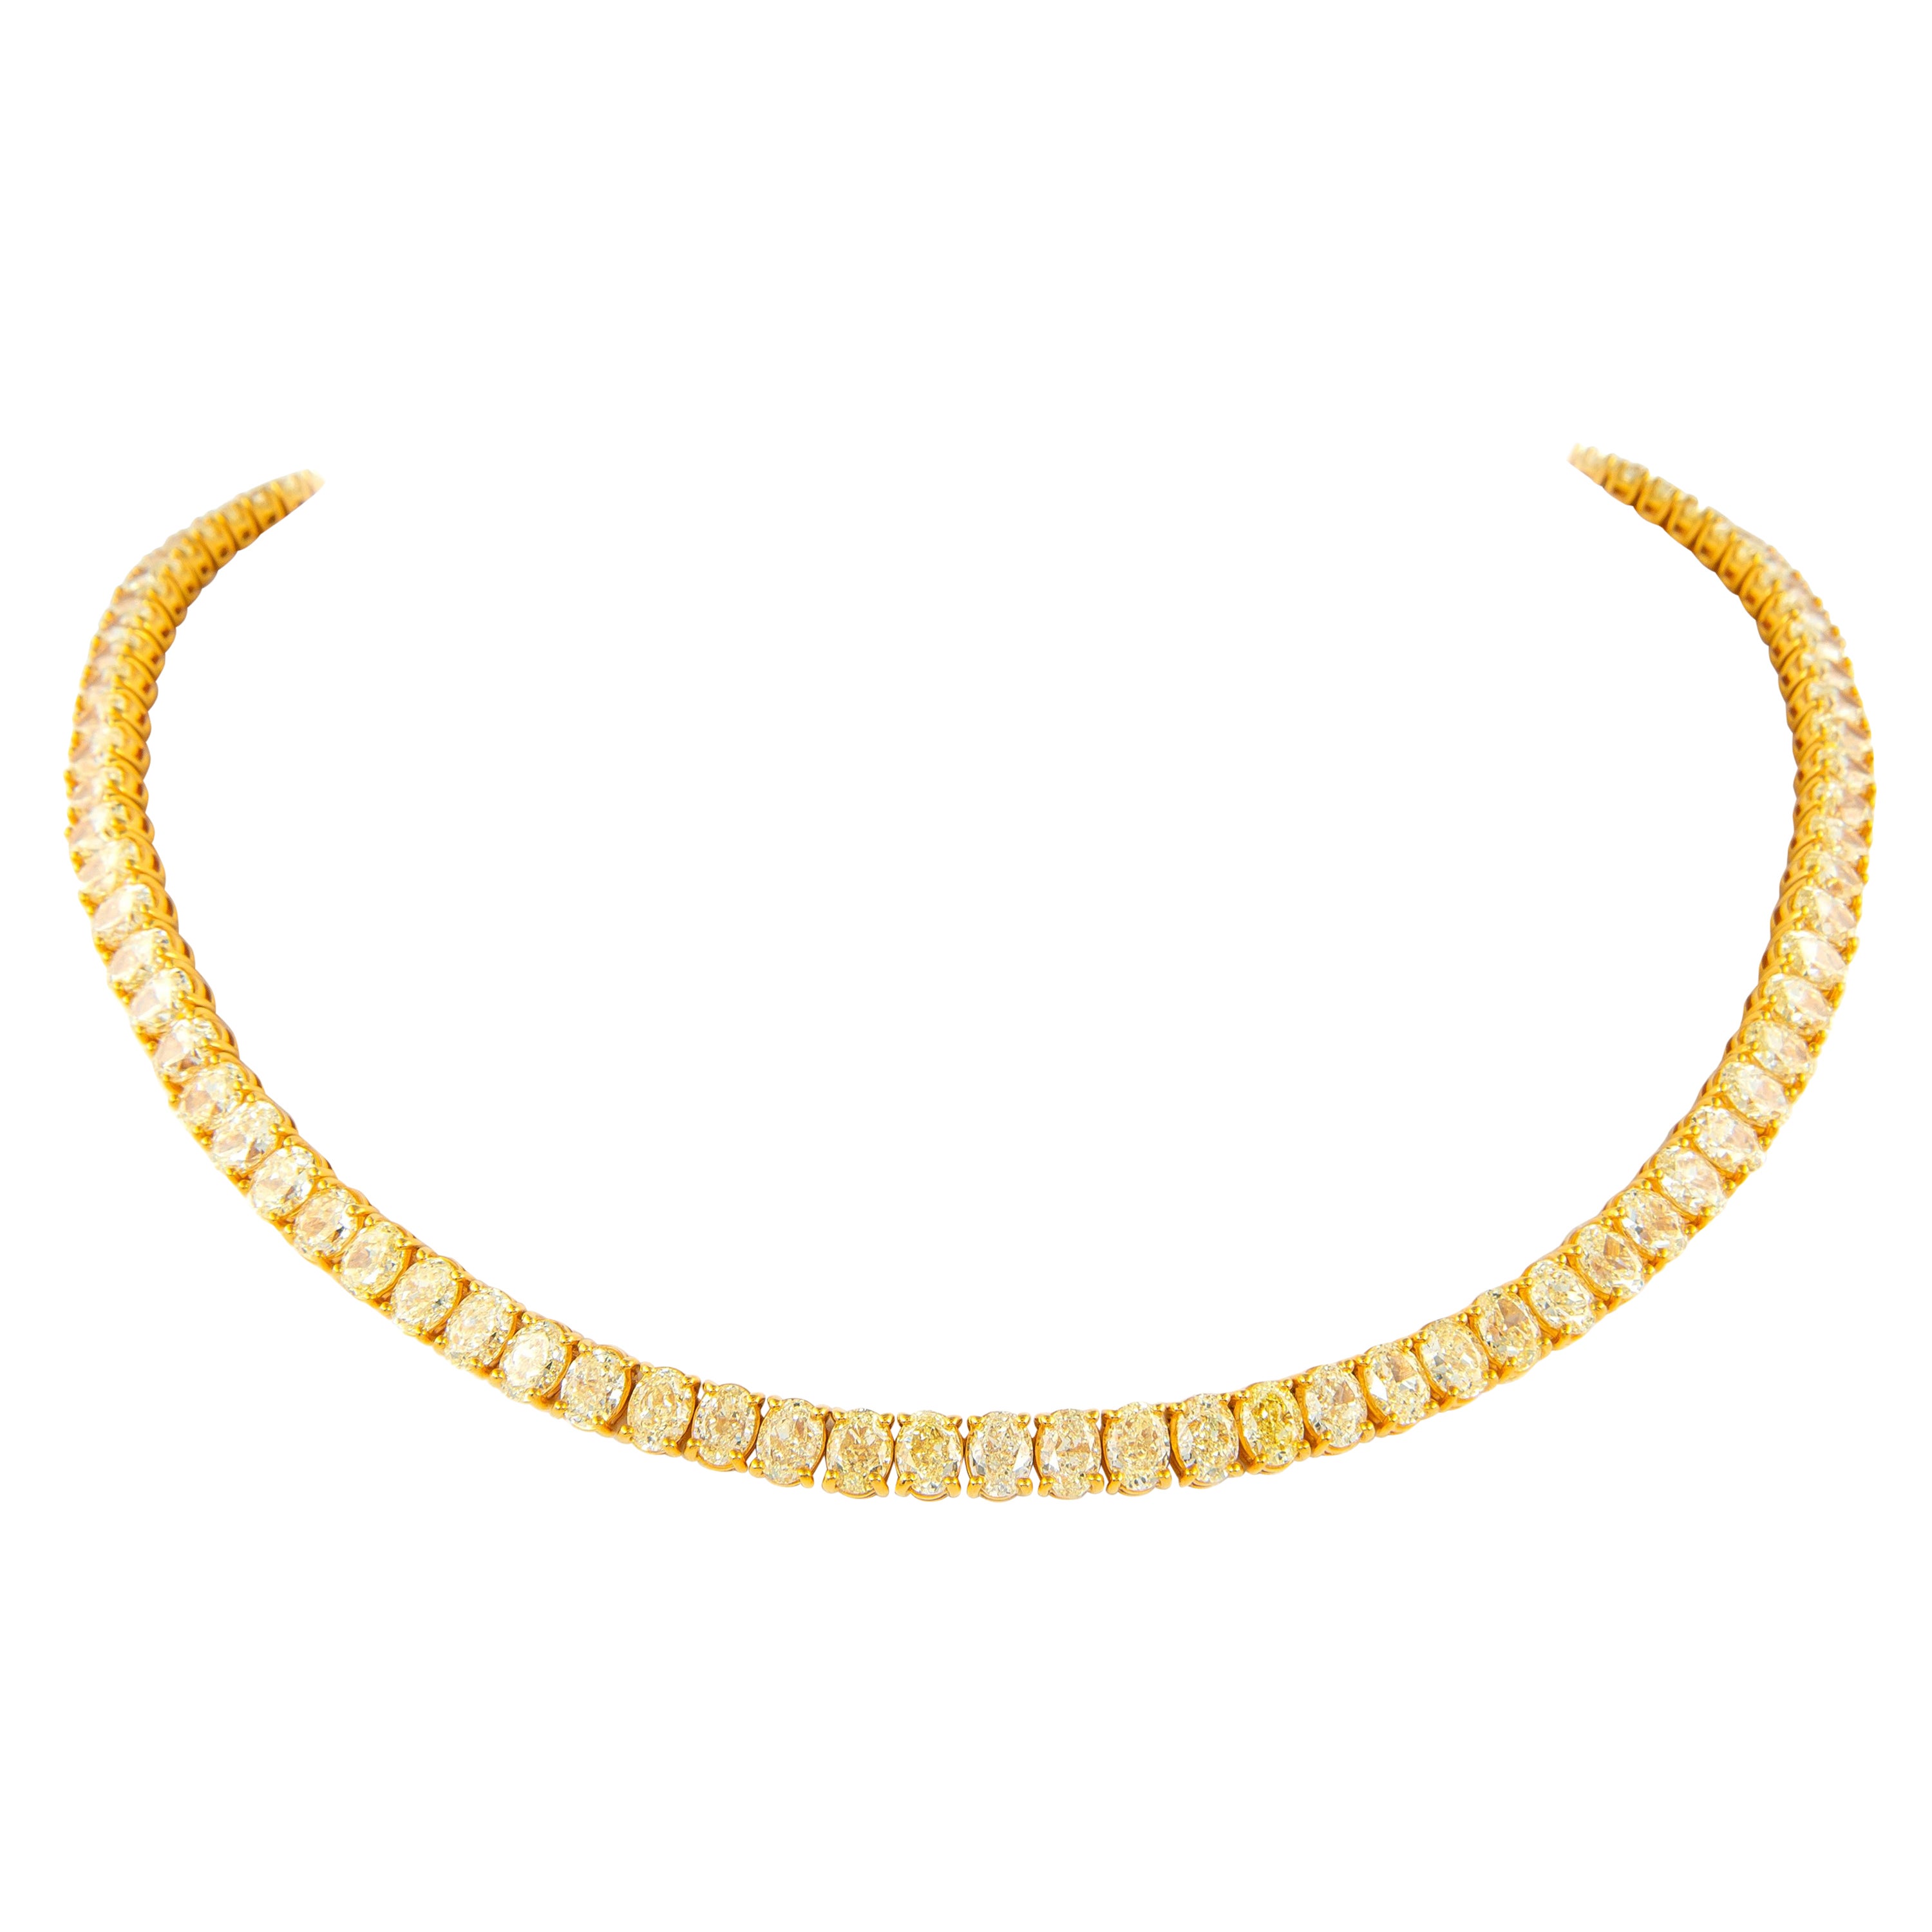 Alexander 43.45ct Oval Fancy Yellow Diamond Tennis Necklace 18k Yellow Gold